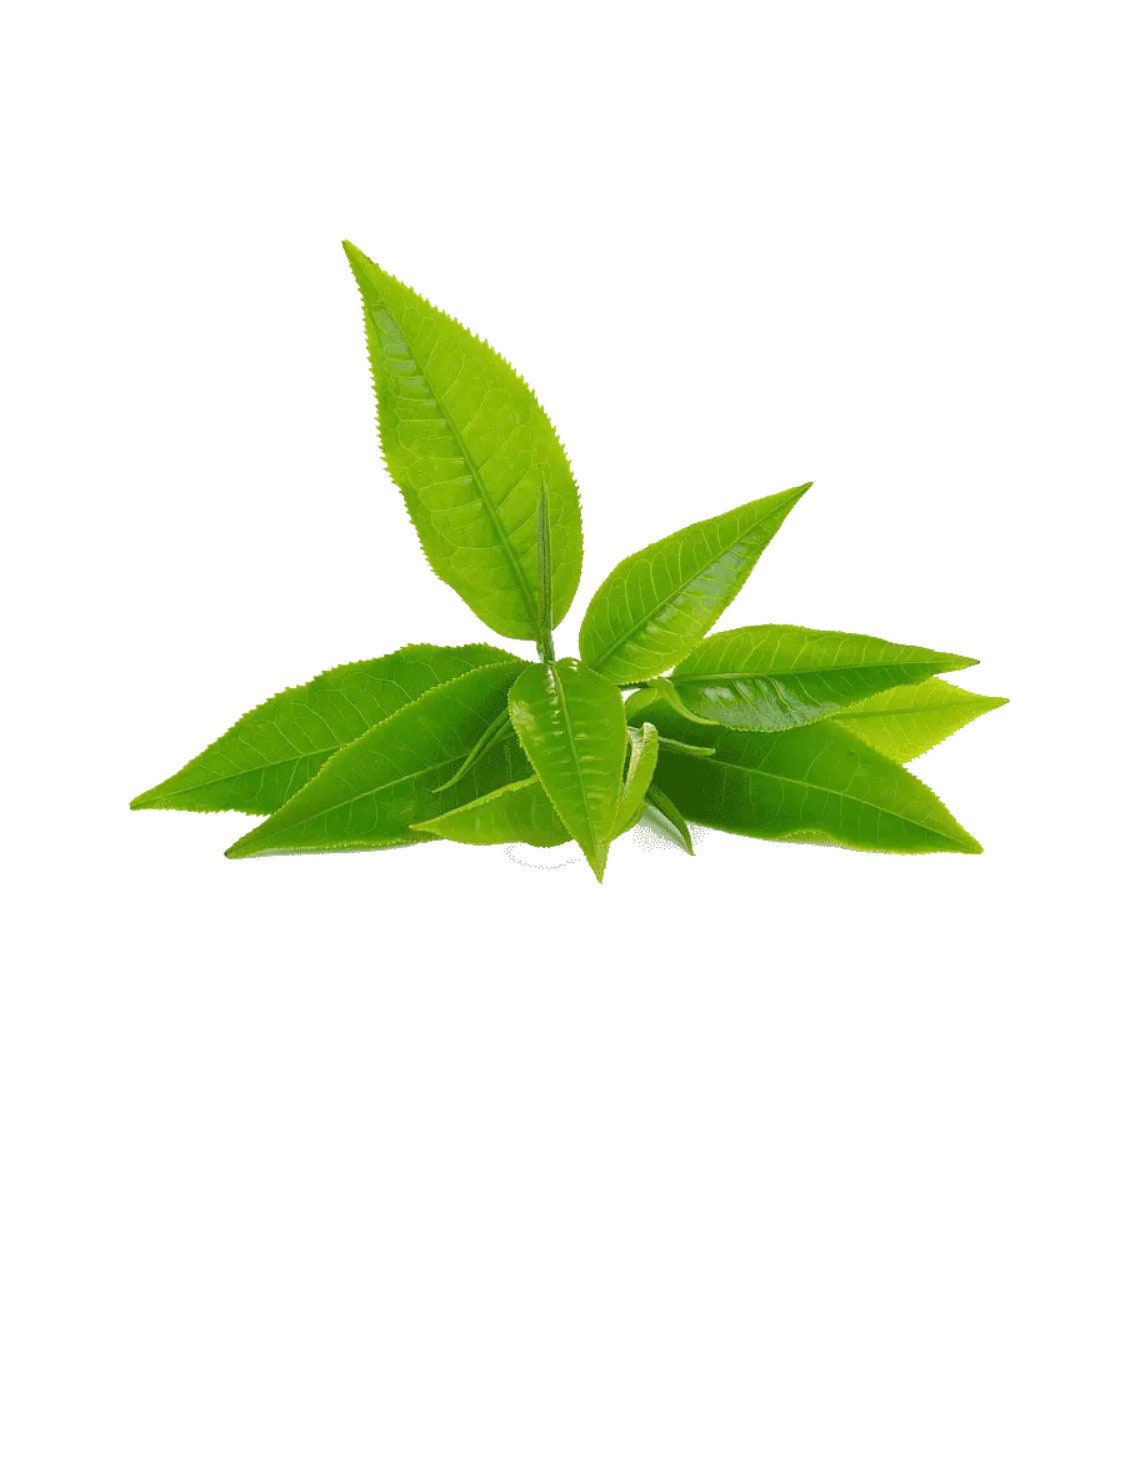 Moringa + Matcha + Spirulina Capsules - Three Greens Superfood - Peak Herbs - DukeCityHerbs